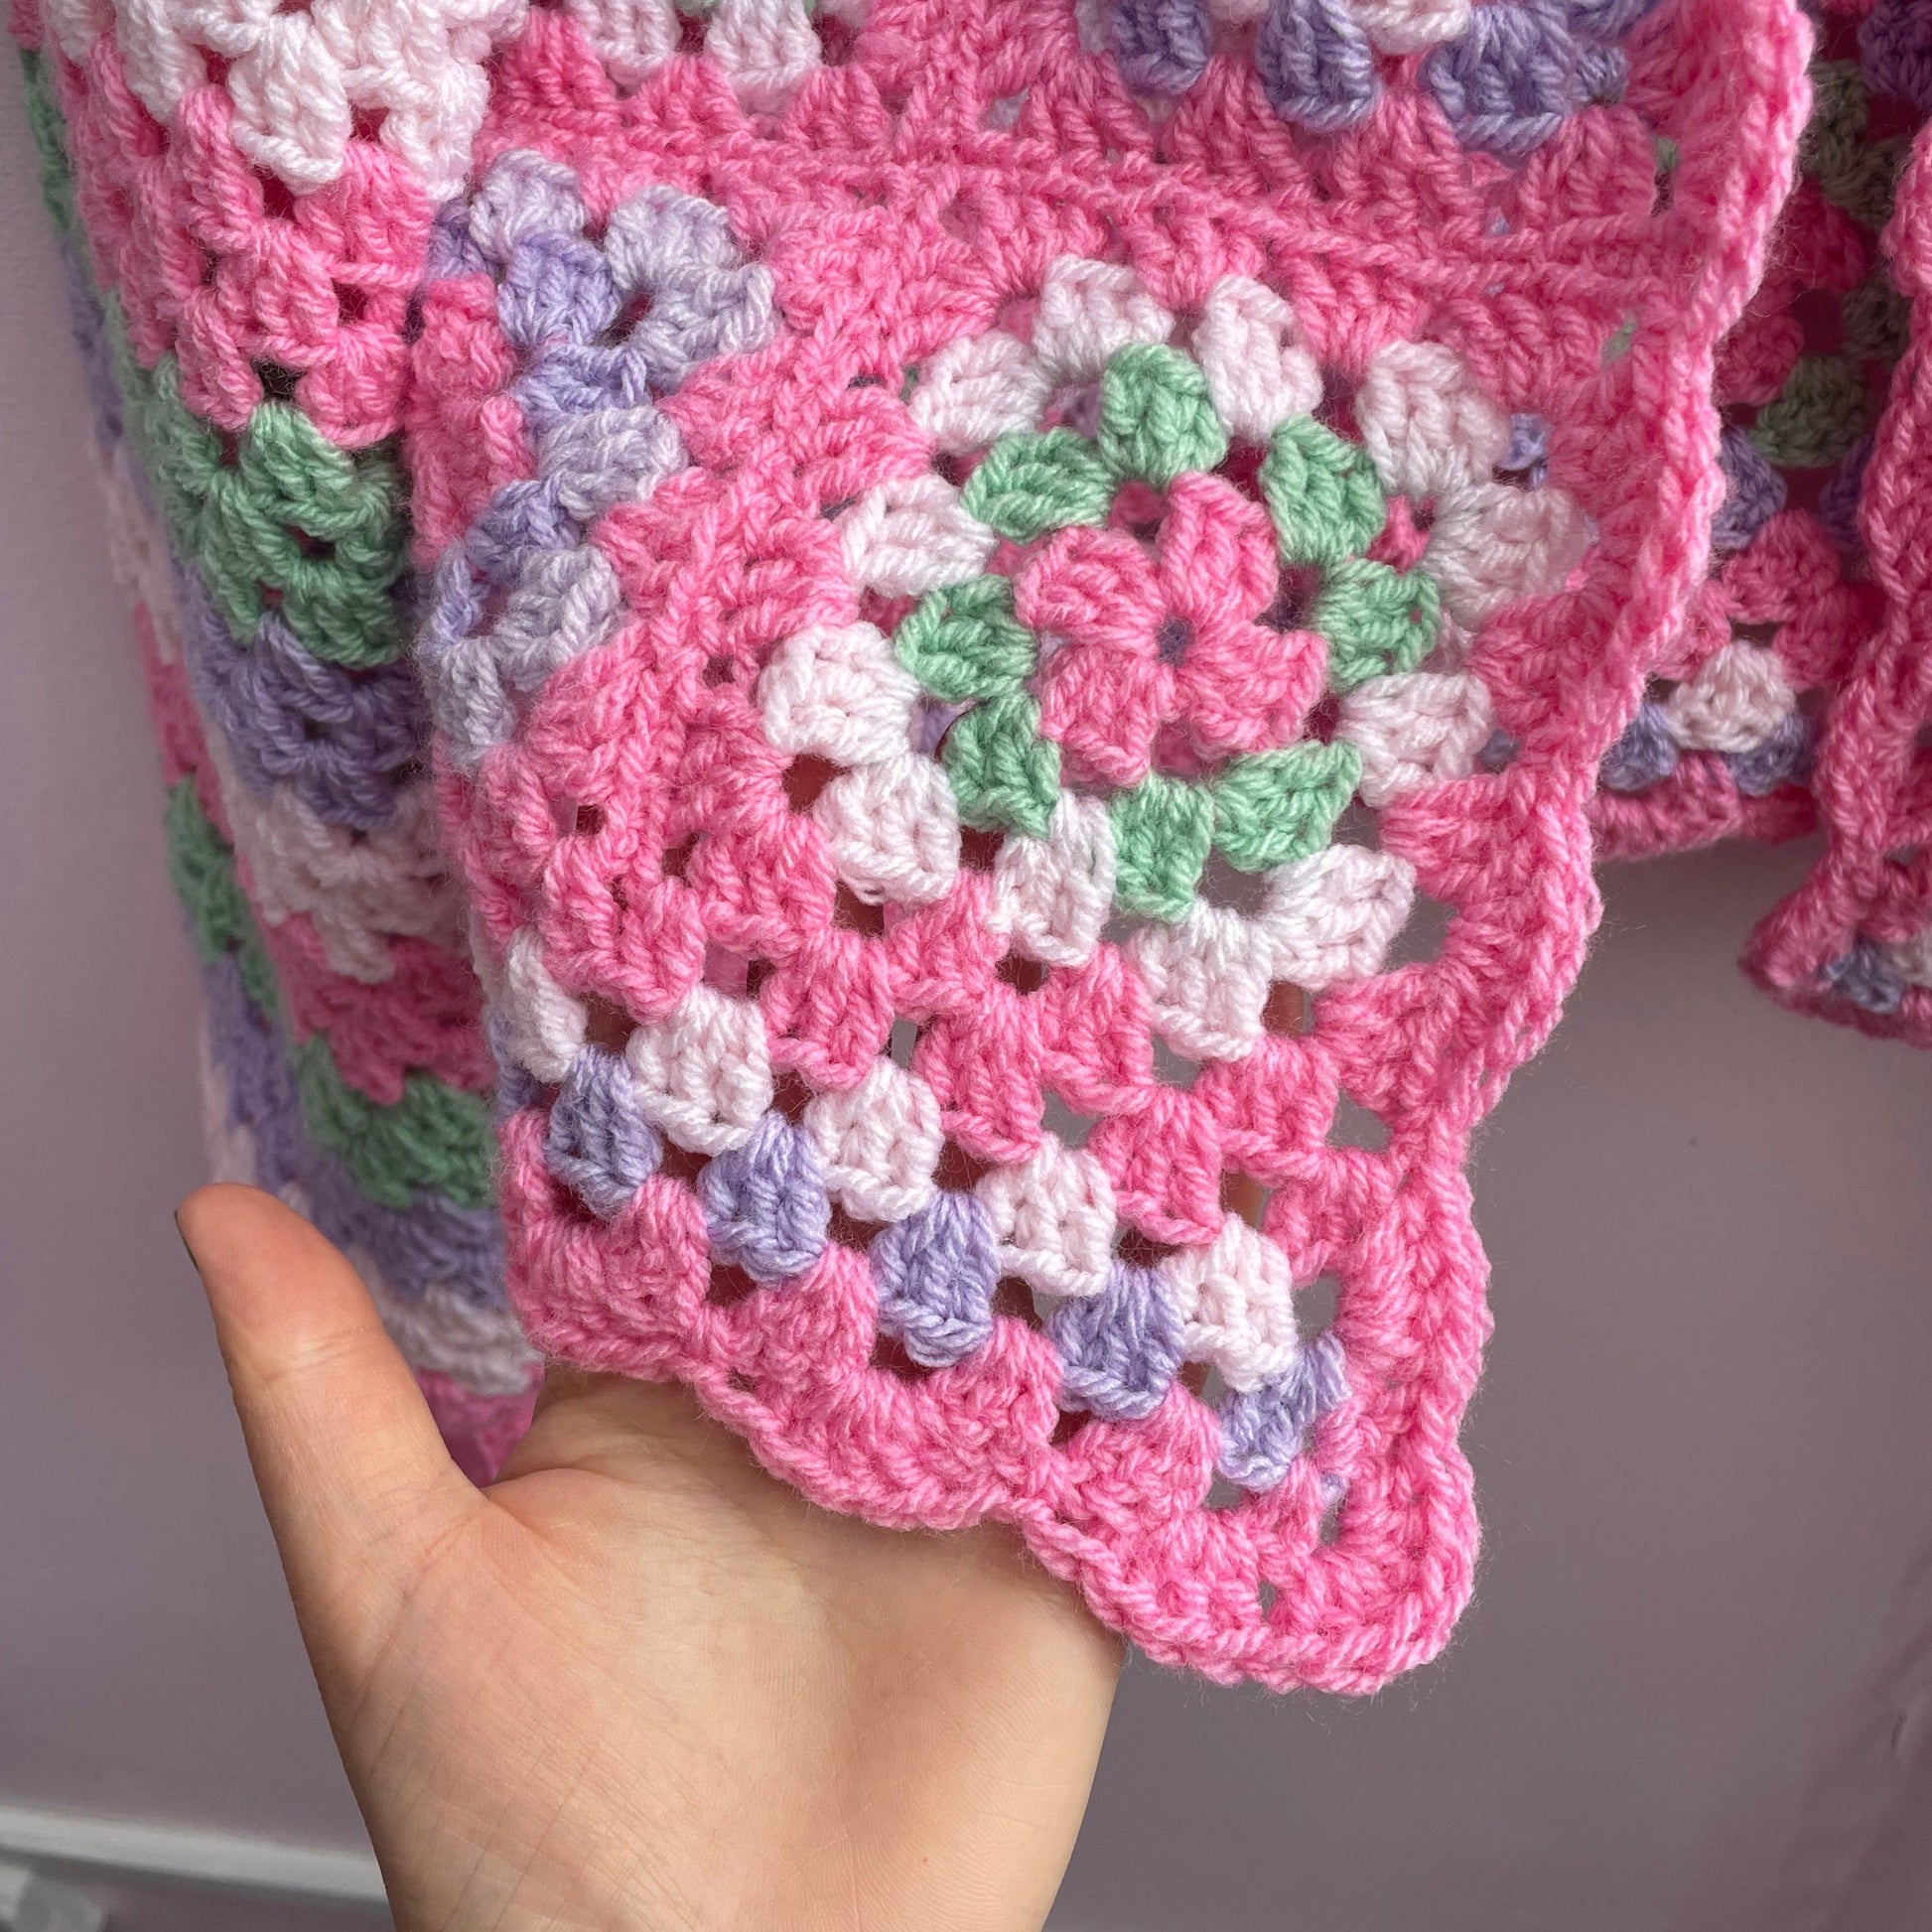 Handmade pink crochet cardigan